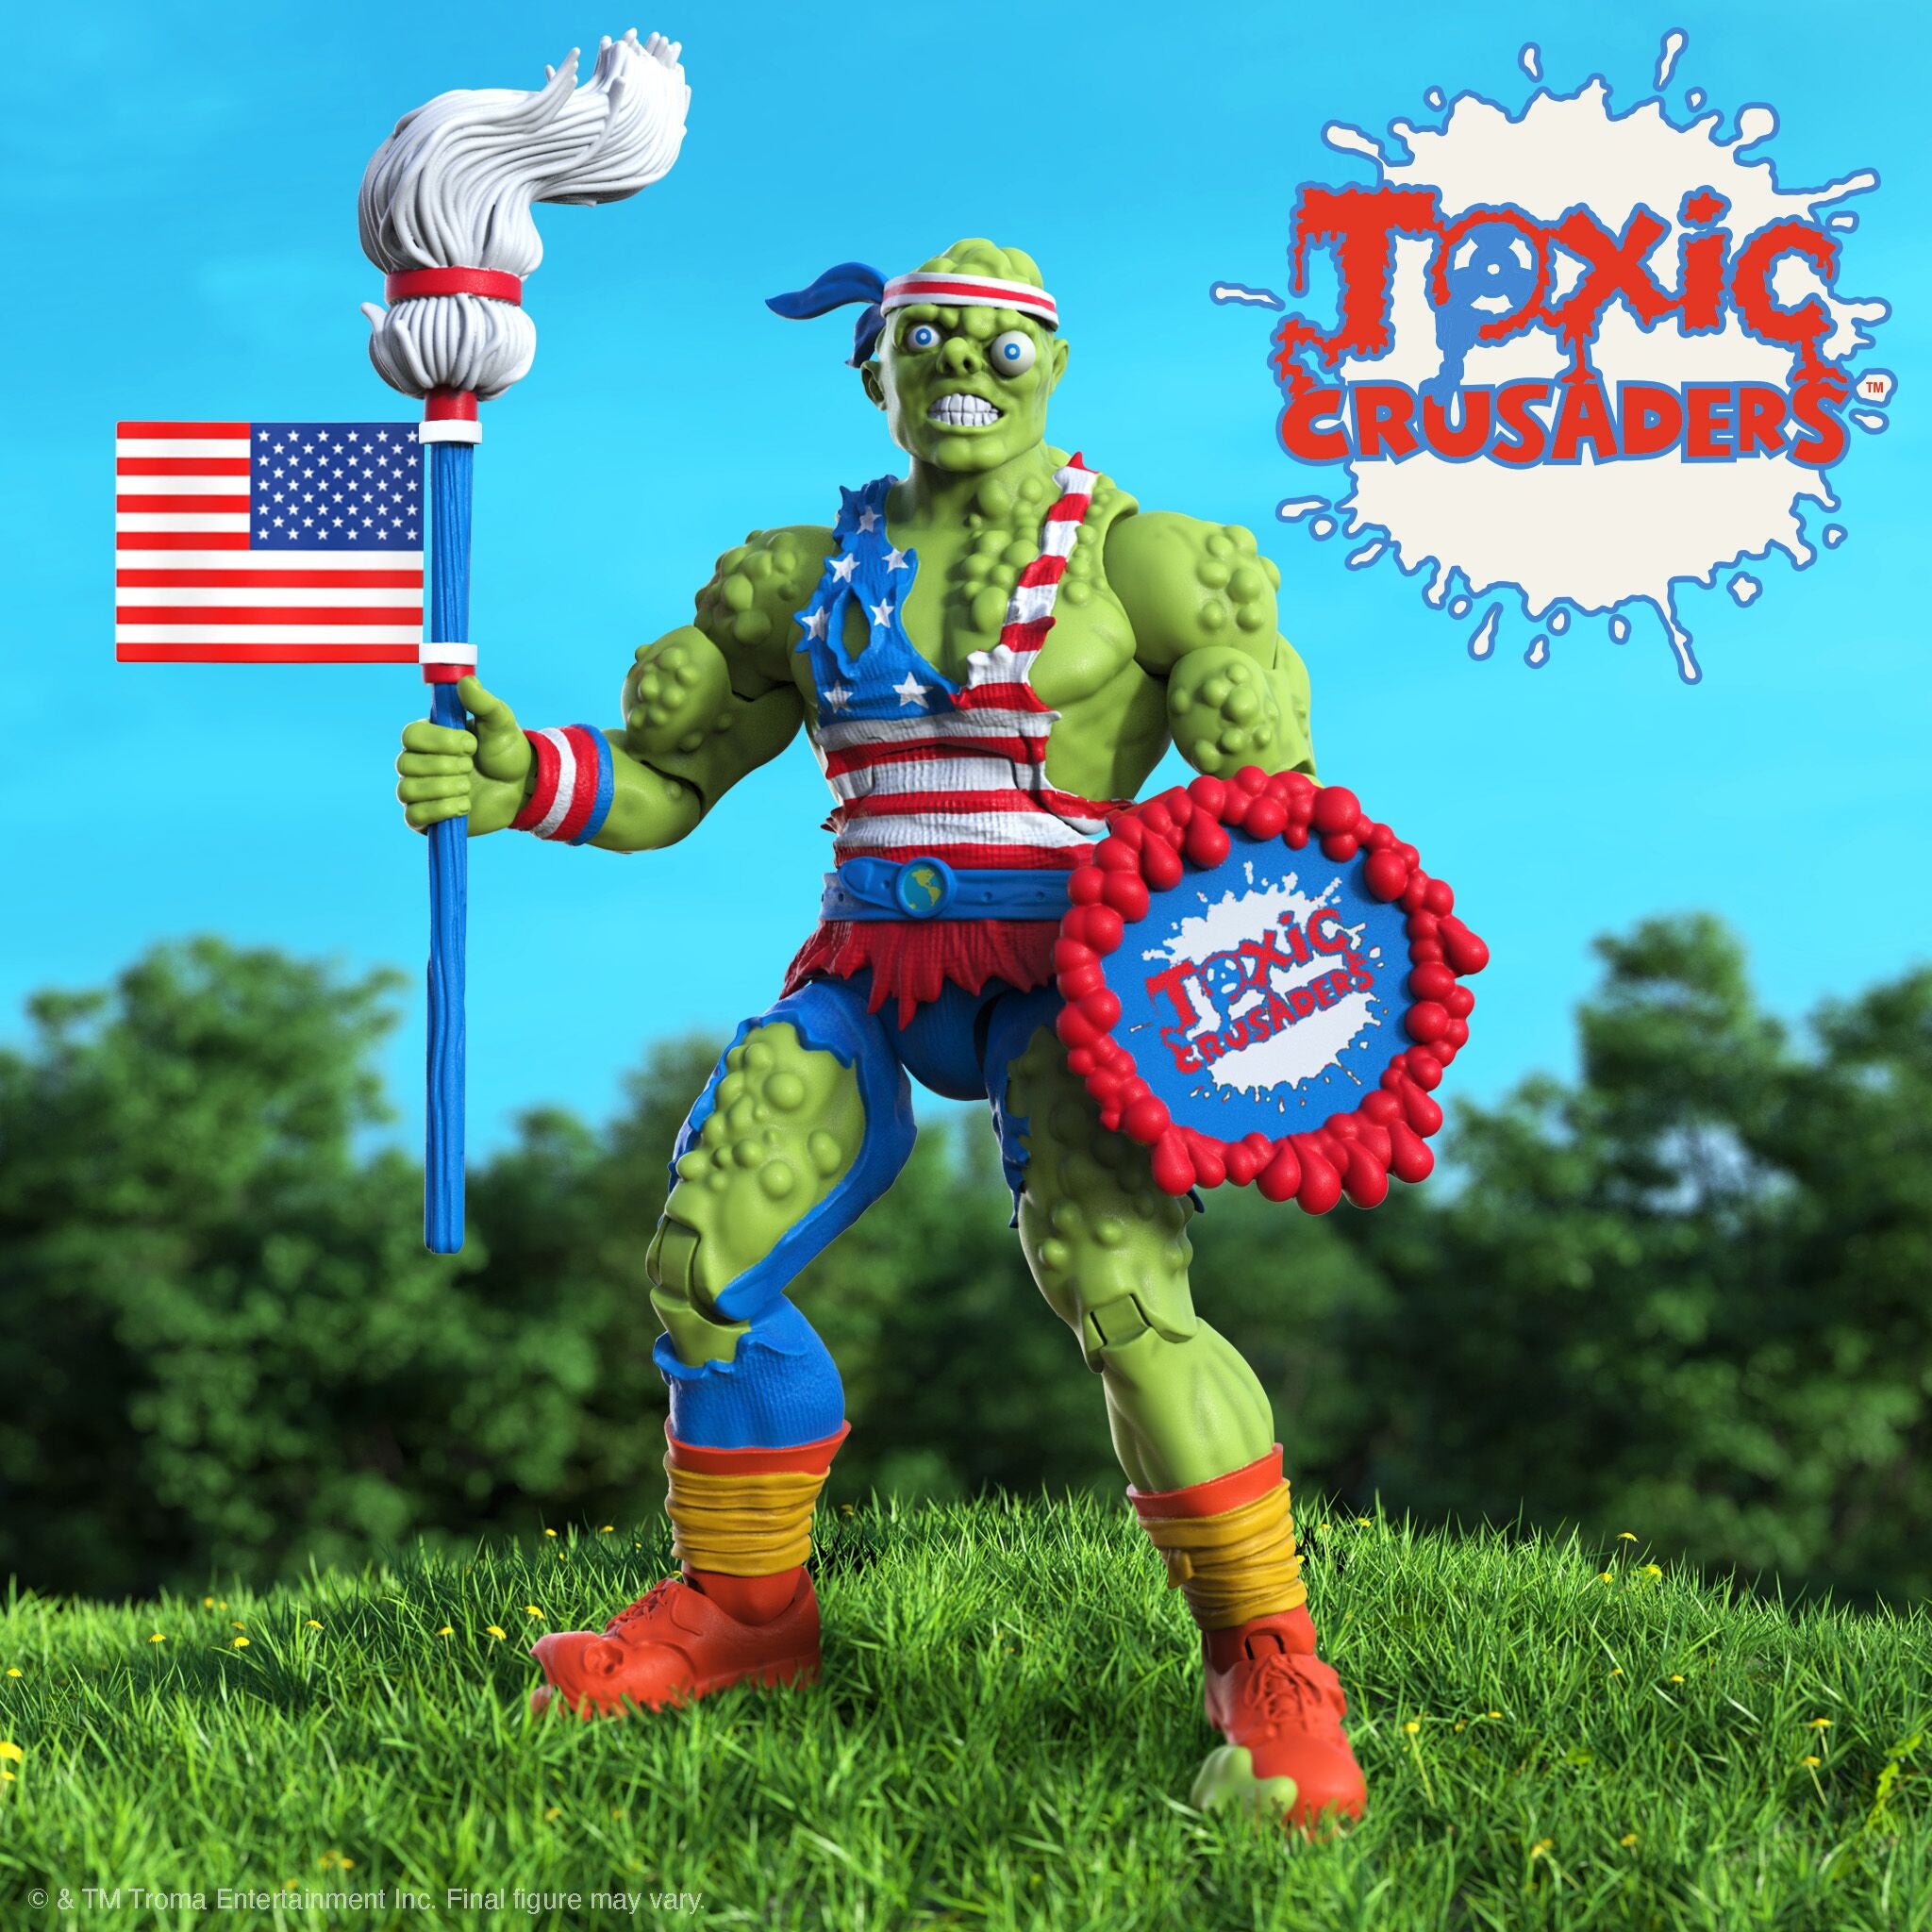 Toxic Crusader ULTIMATES! Wave 05 - Toxie (Vintage Toy America)